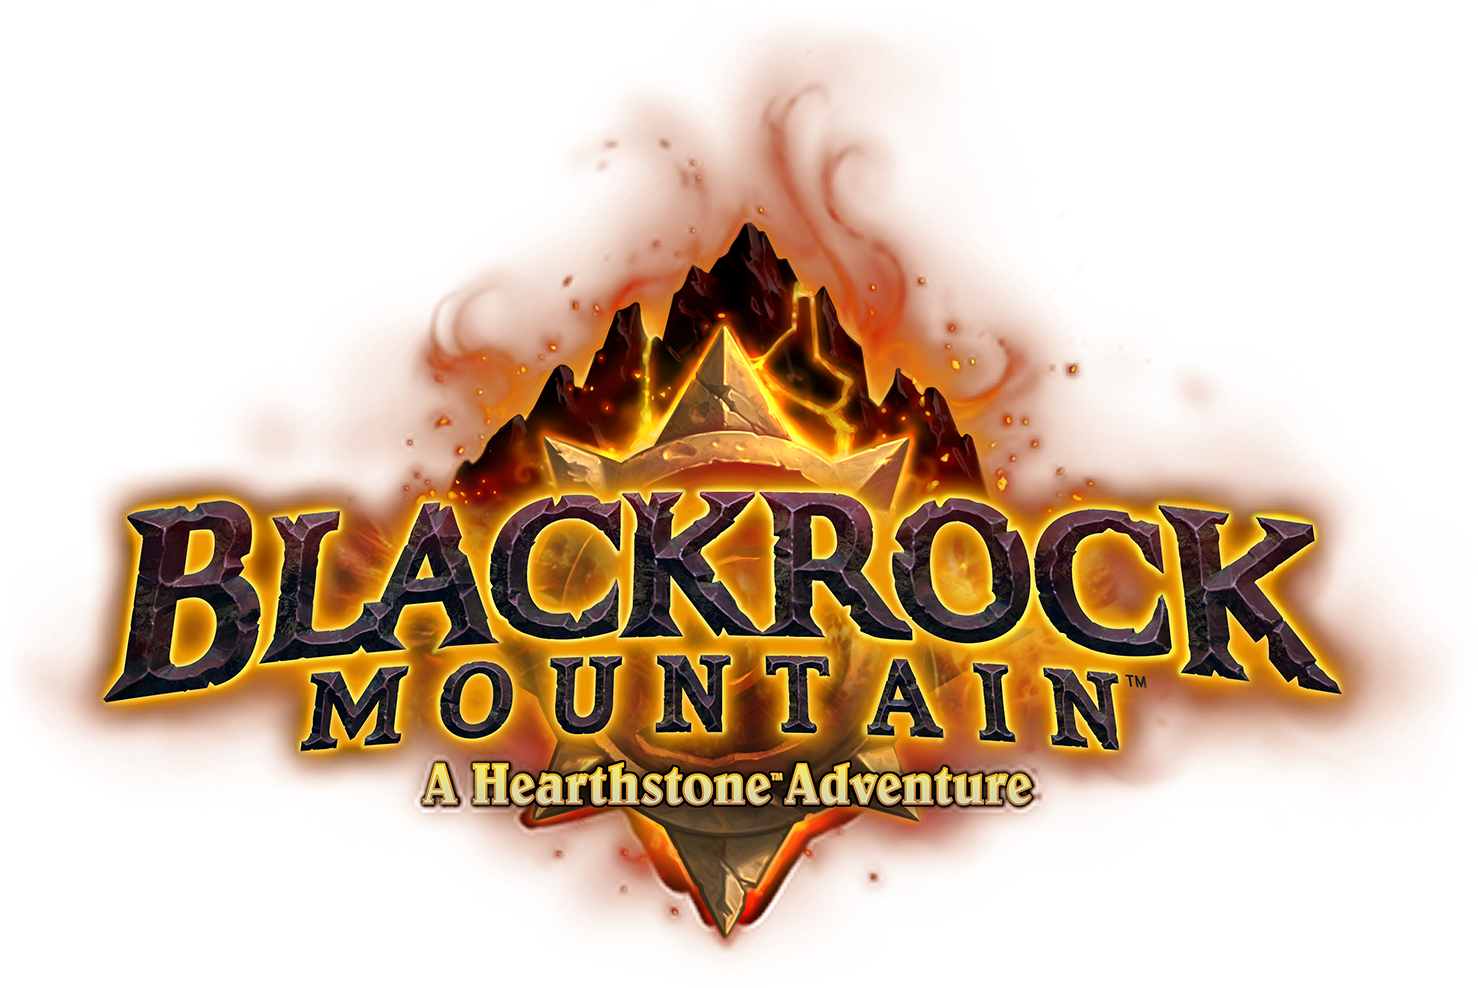 Blackrock Mountain Adventure Artist - Blackrock Mountain: A Hearthstone Adventure Clipart (2000x1120), Png Download